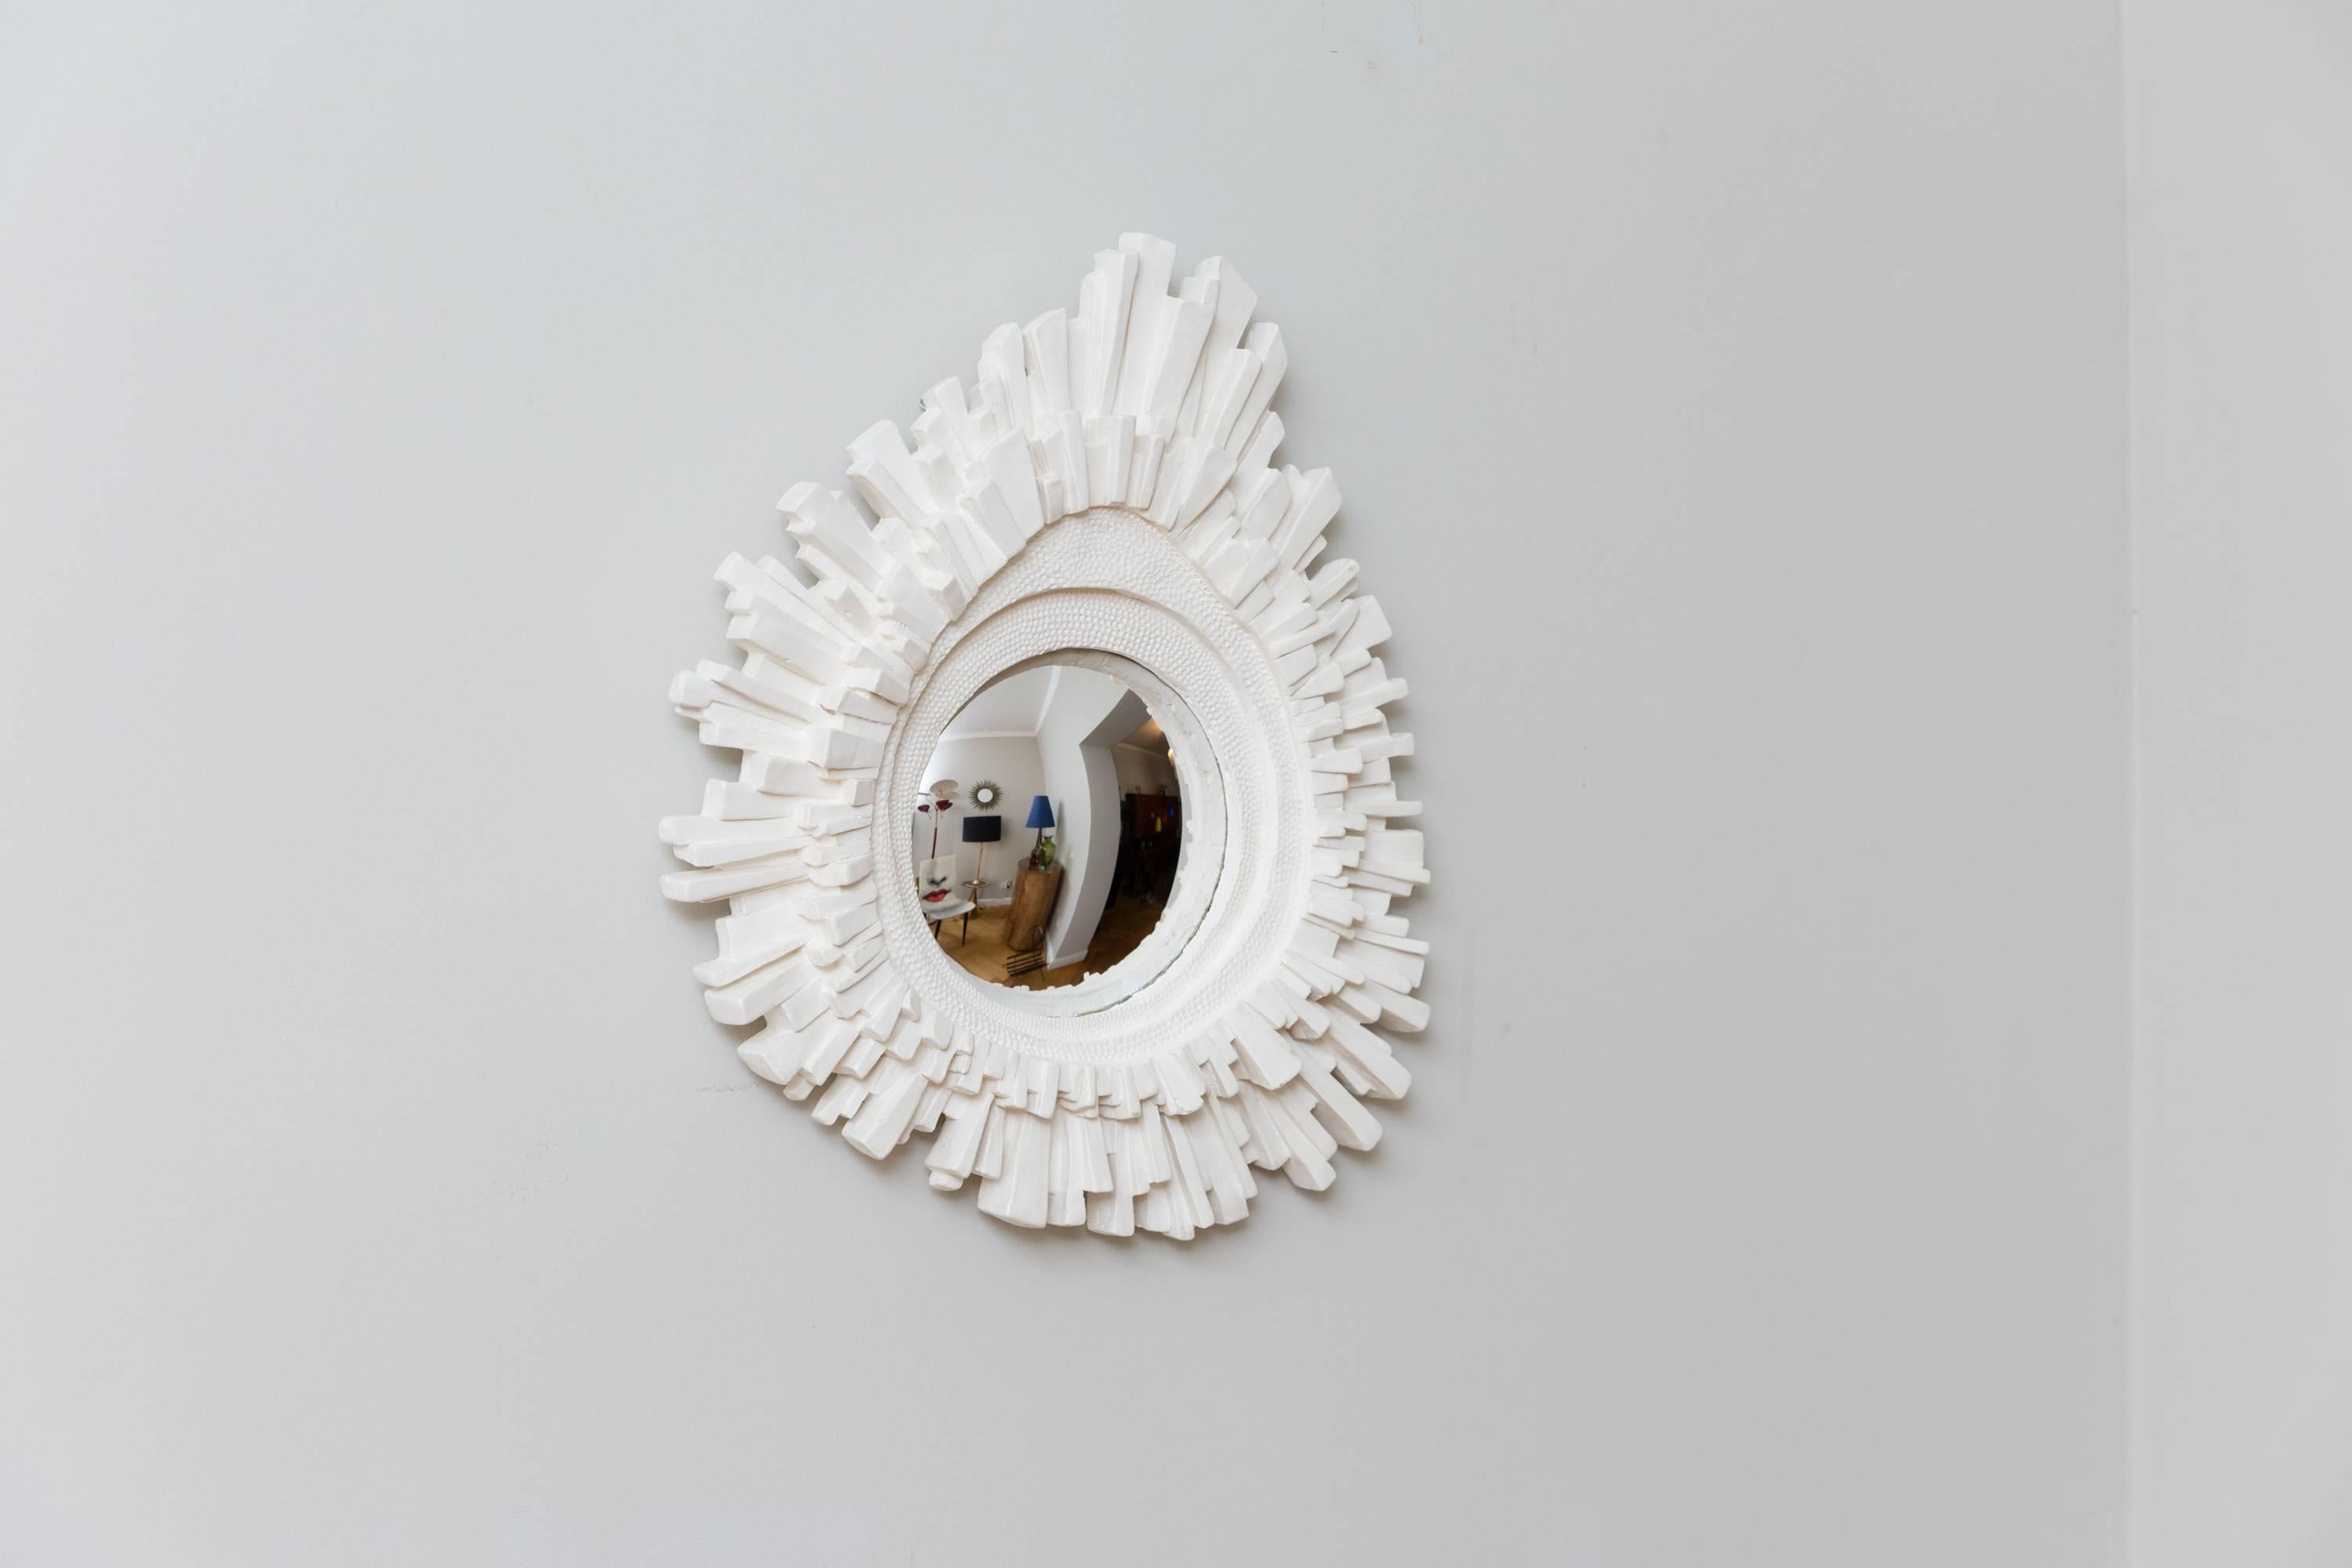 Modern Convex Mirror Object by Vincent Vauban, France, 2017